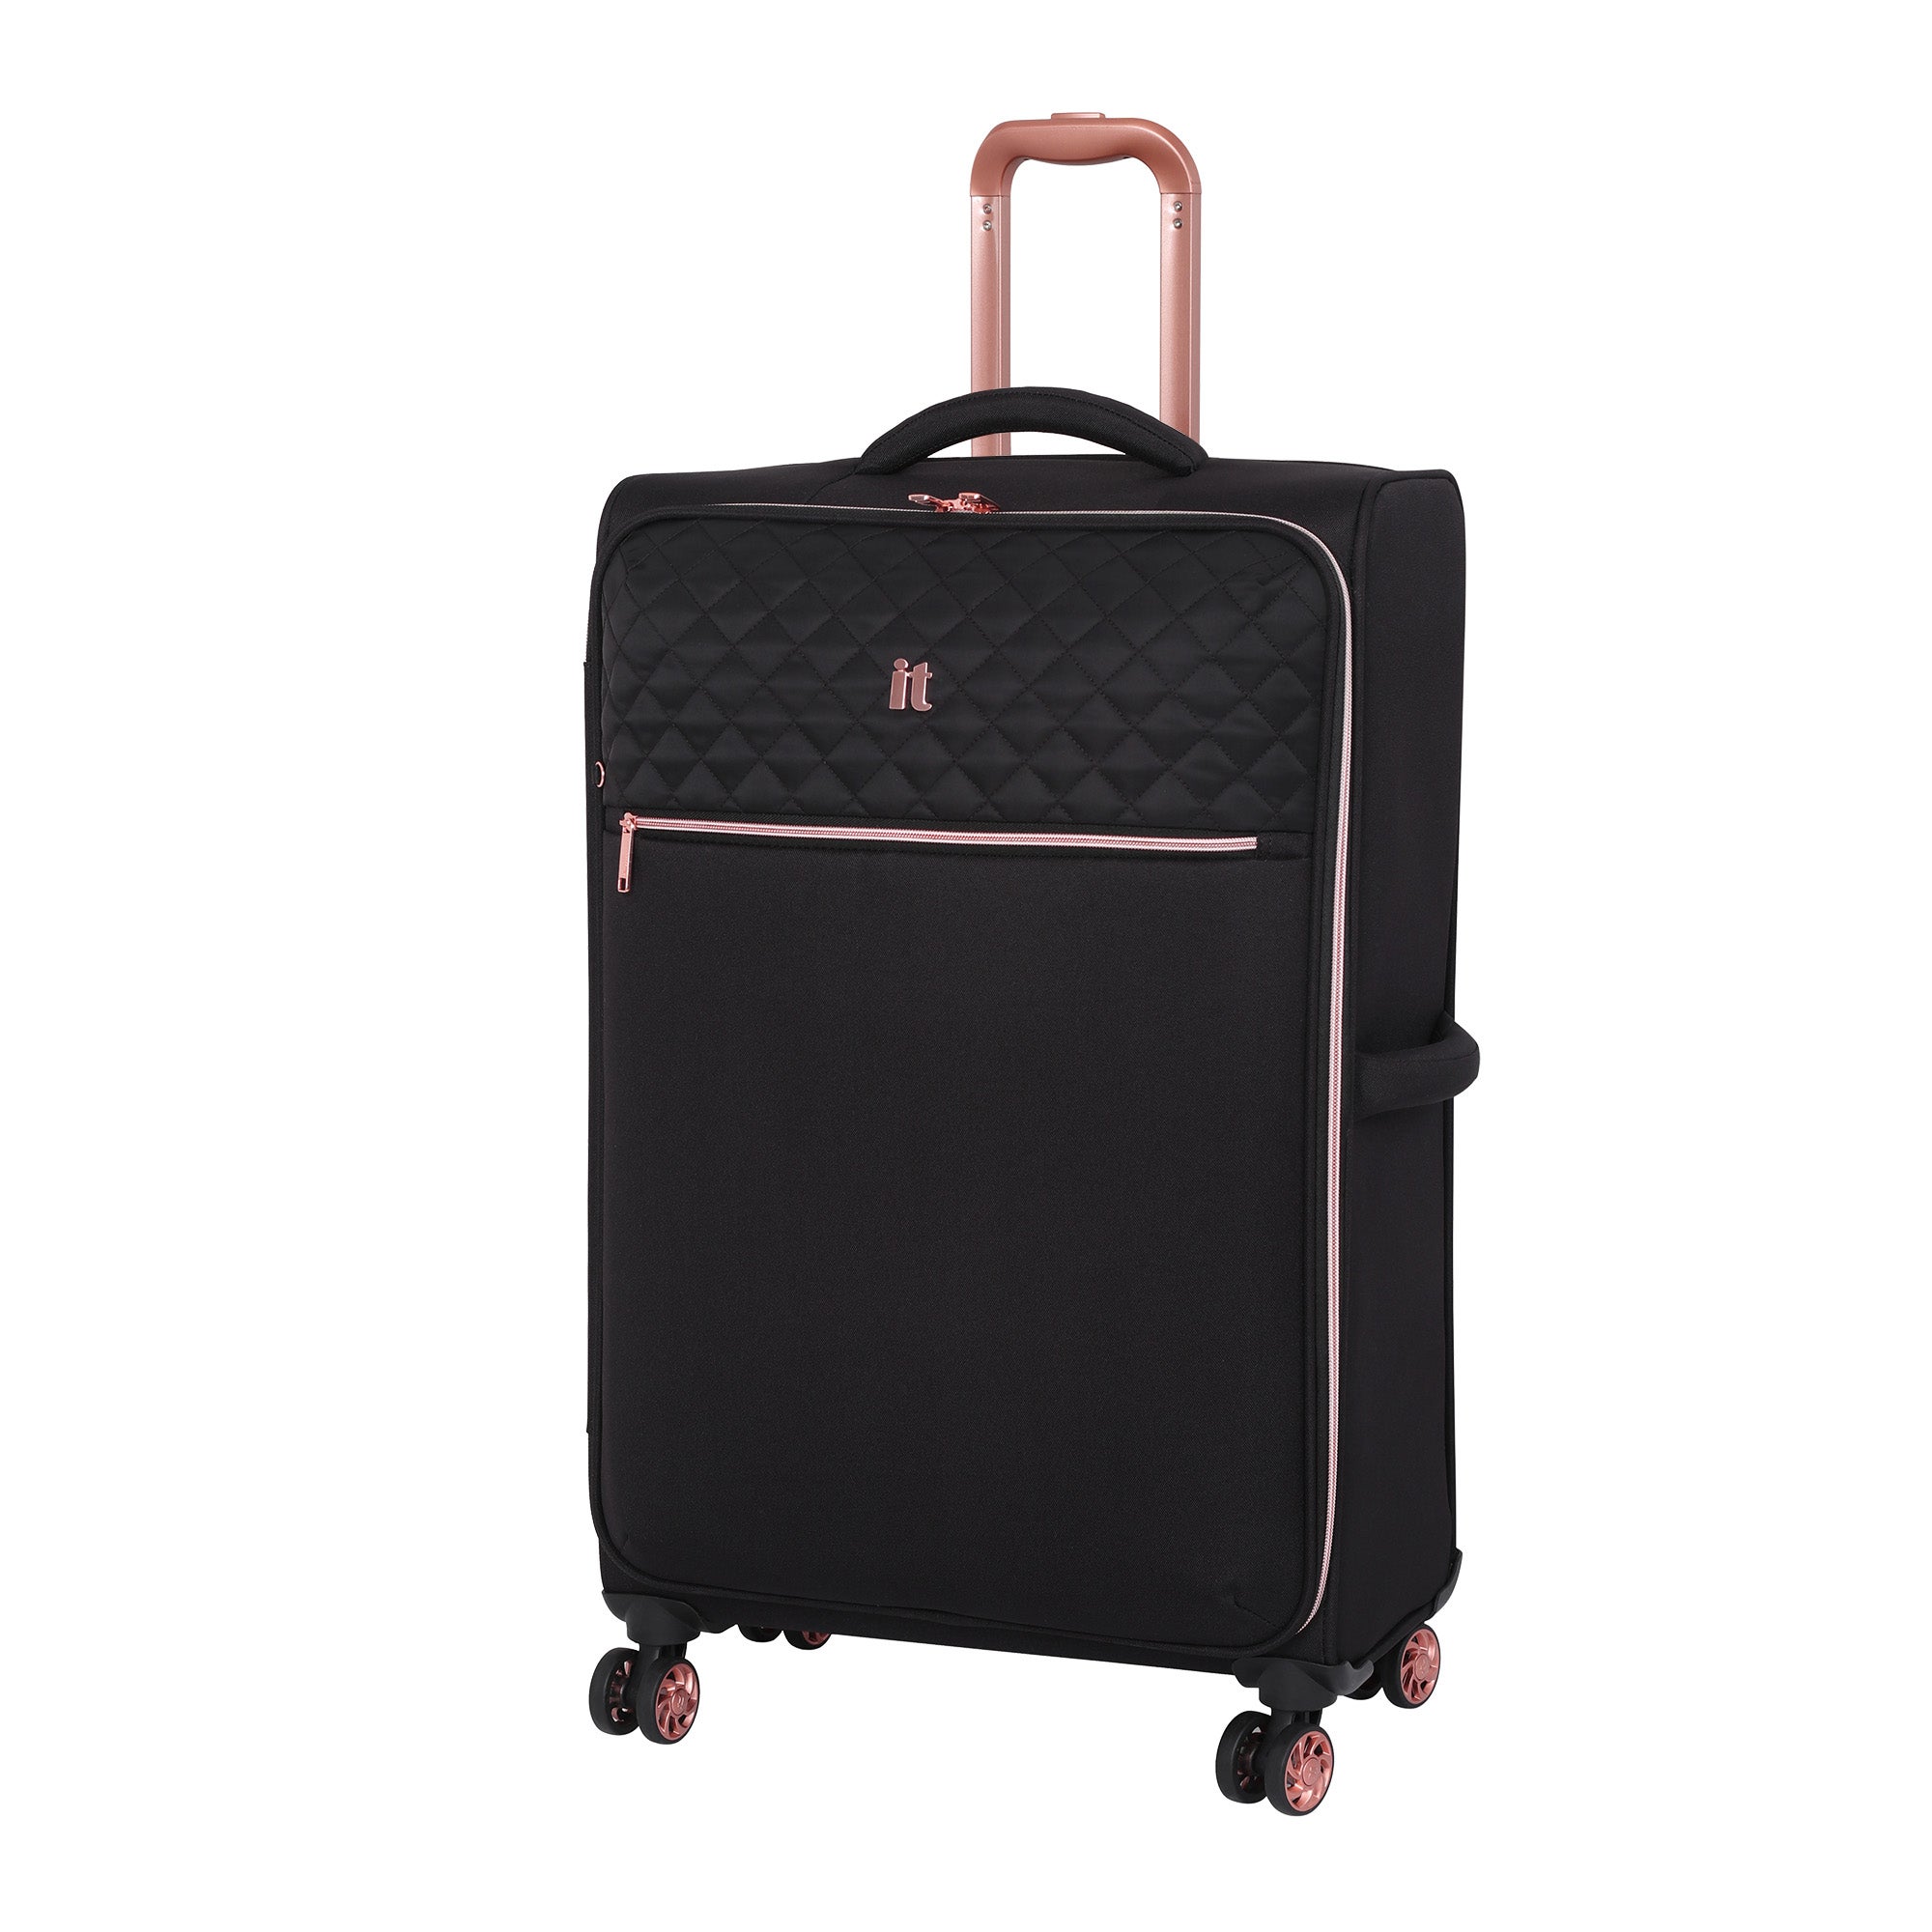 It Luggage Black And Rose Gold Divinity 4W Suitcase, Size: Medium Case